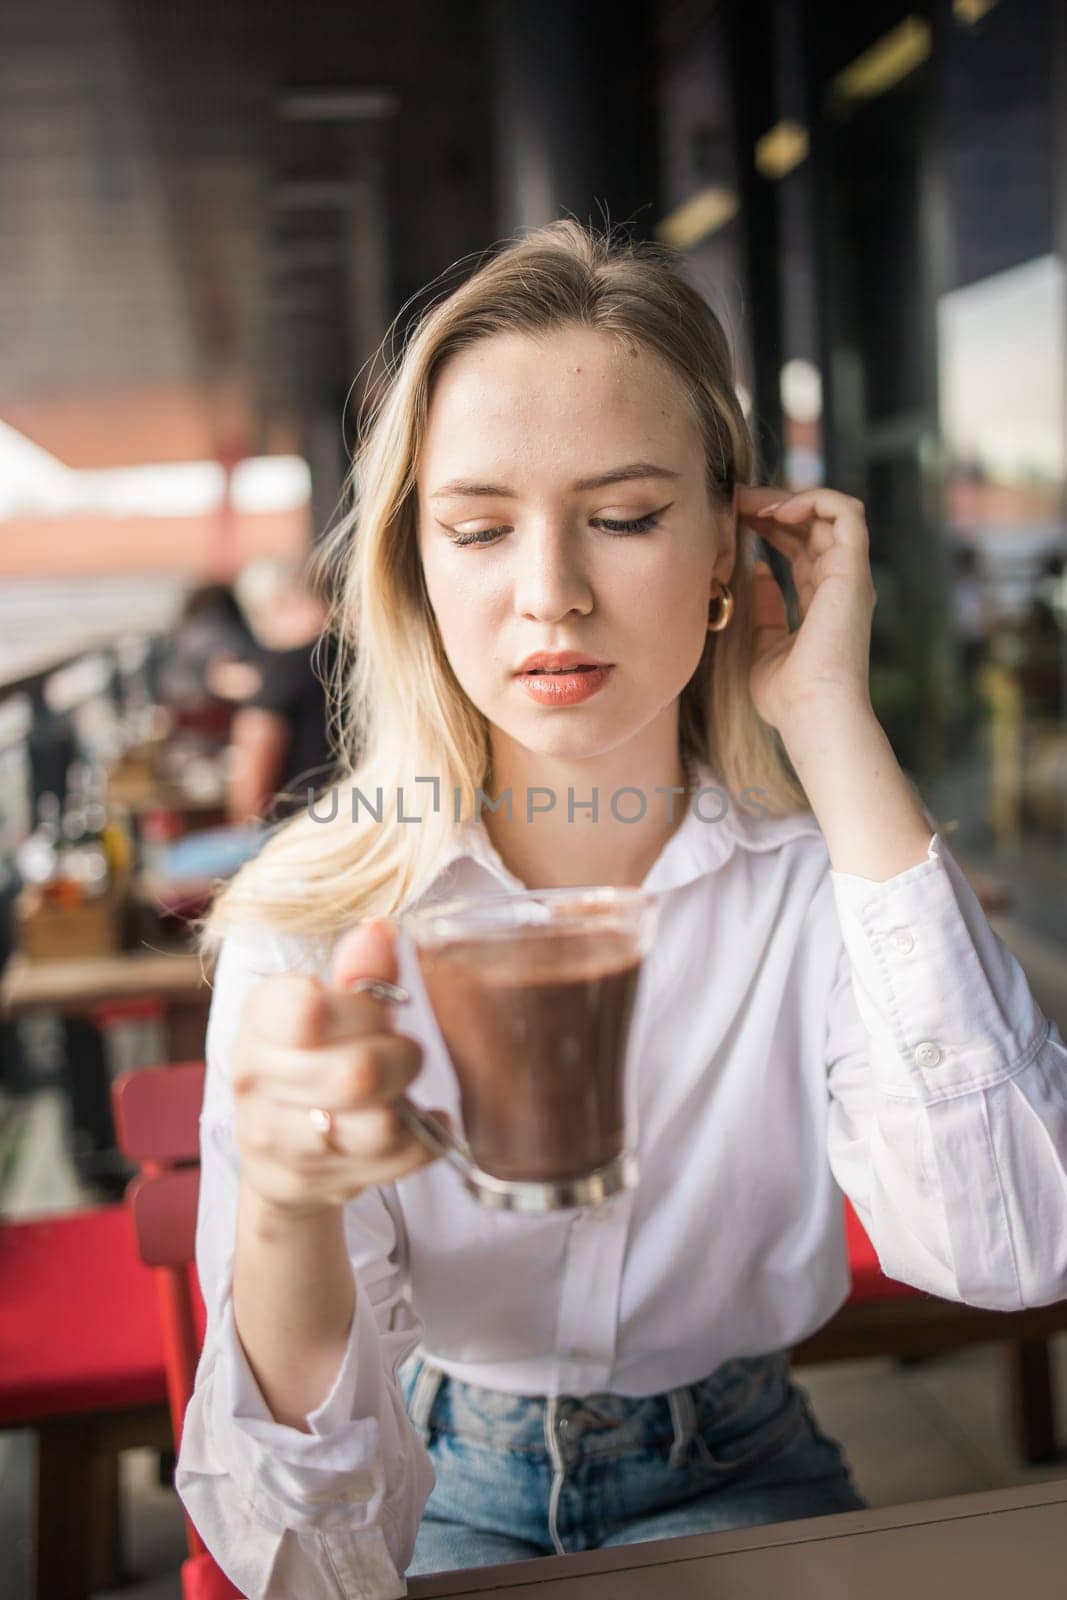 Gen z blonde woman drinks hot chocolate in summer cafe. Tasty beverage and break